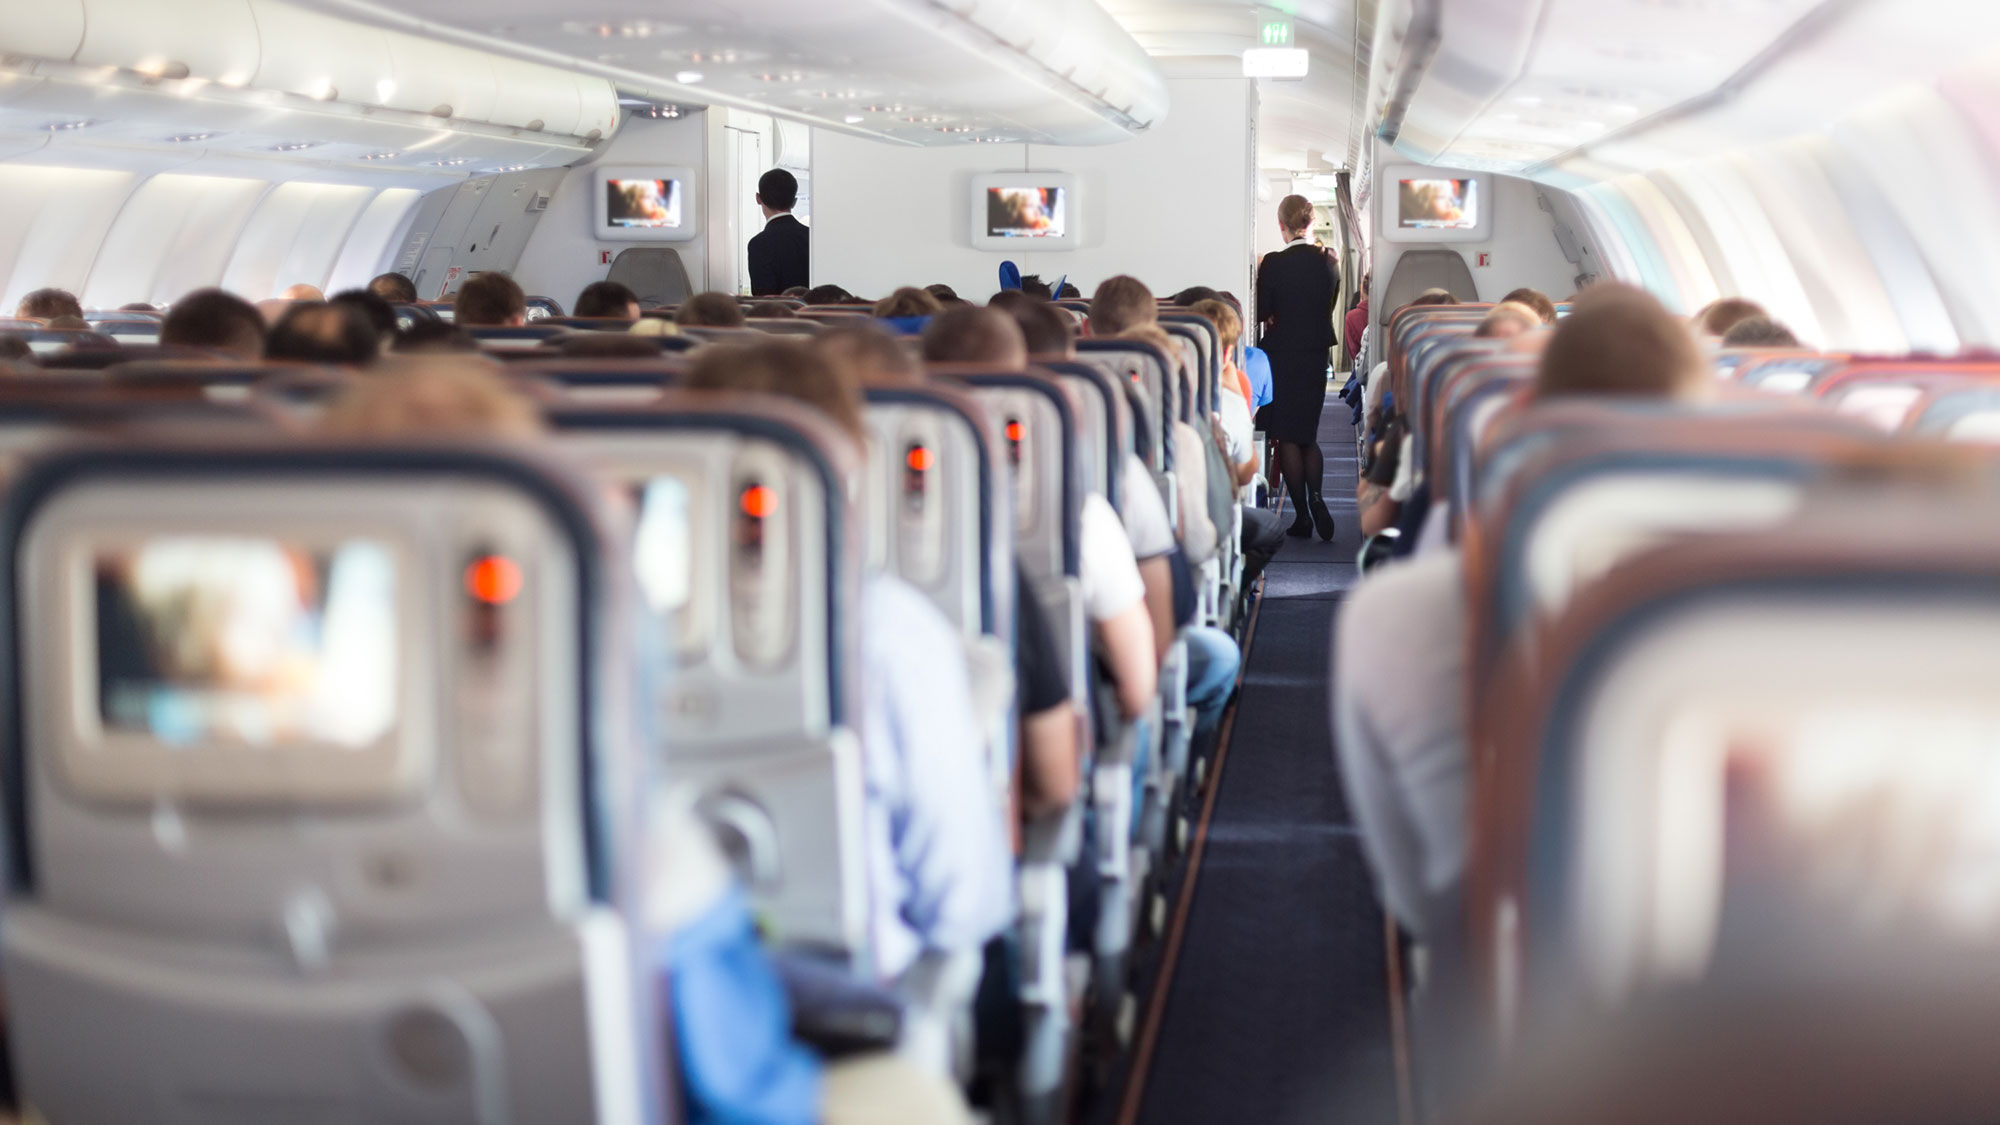 Airline seats [Credit: Matej Kastelic/Shutterstock.com]